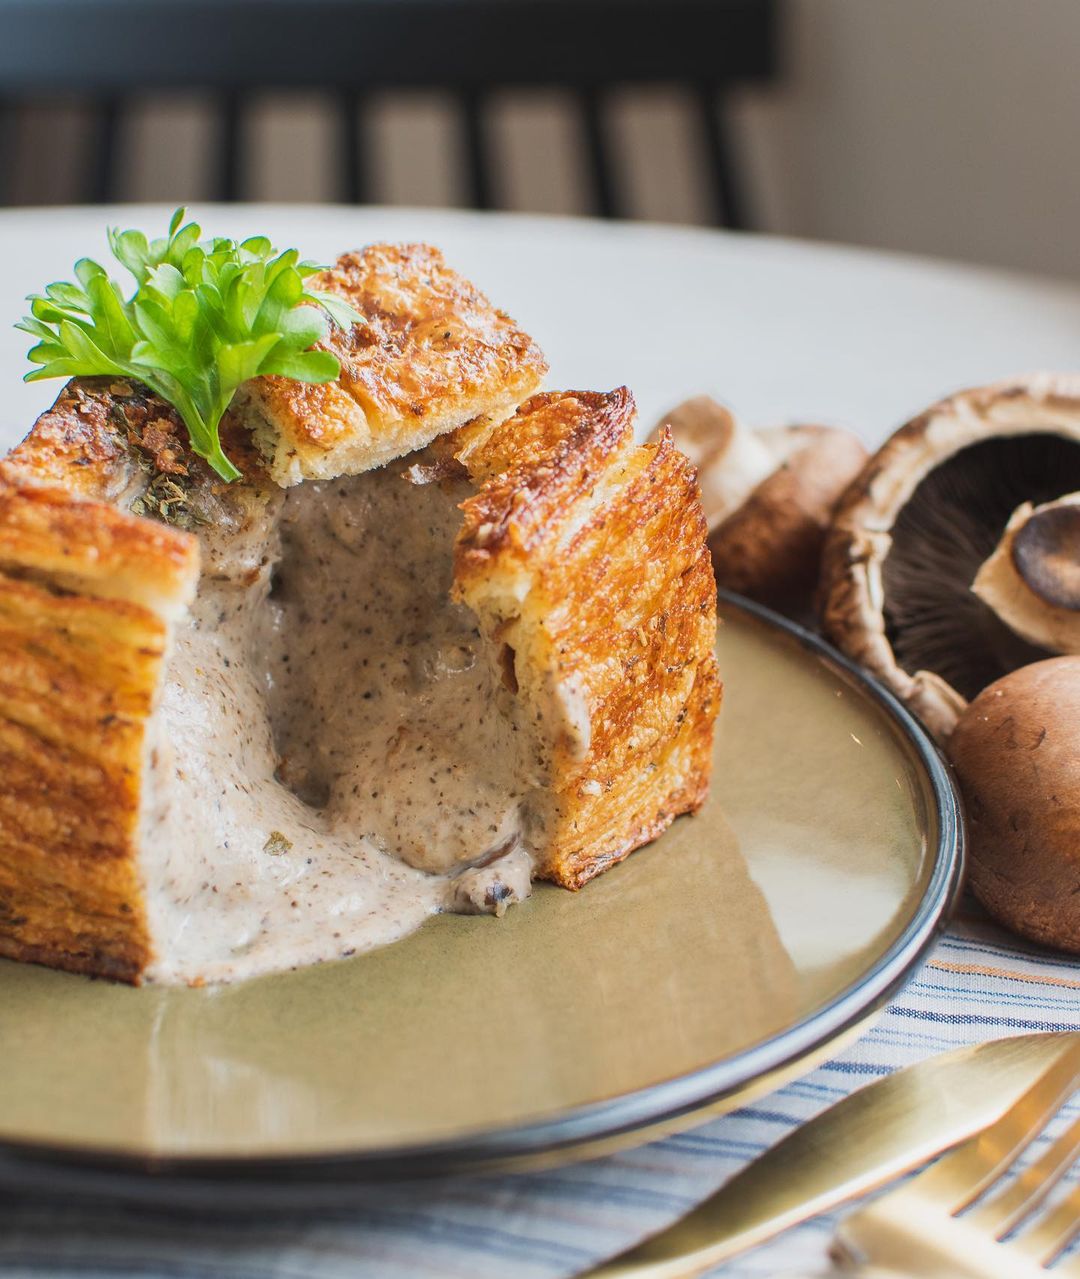 keong saik bakery - mushroom soup croissant cube